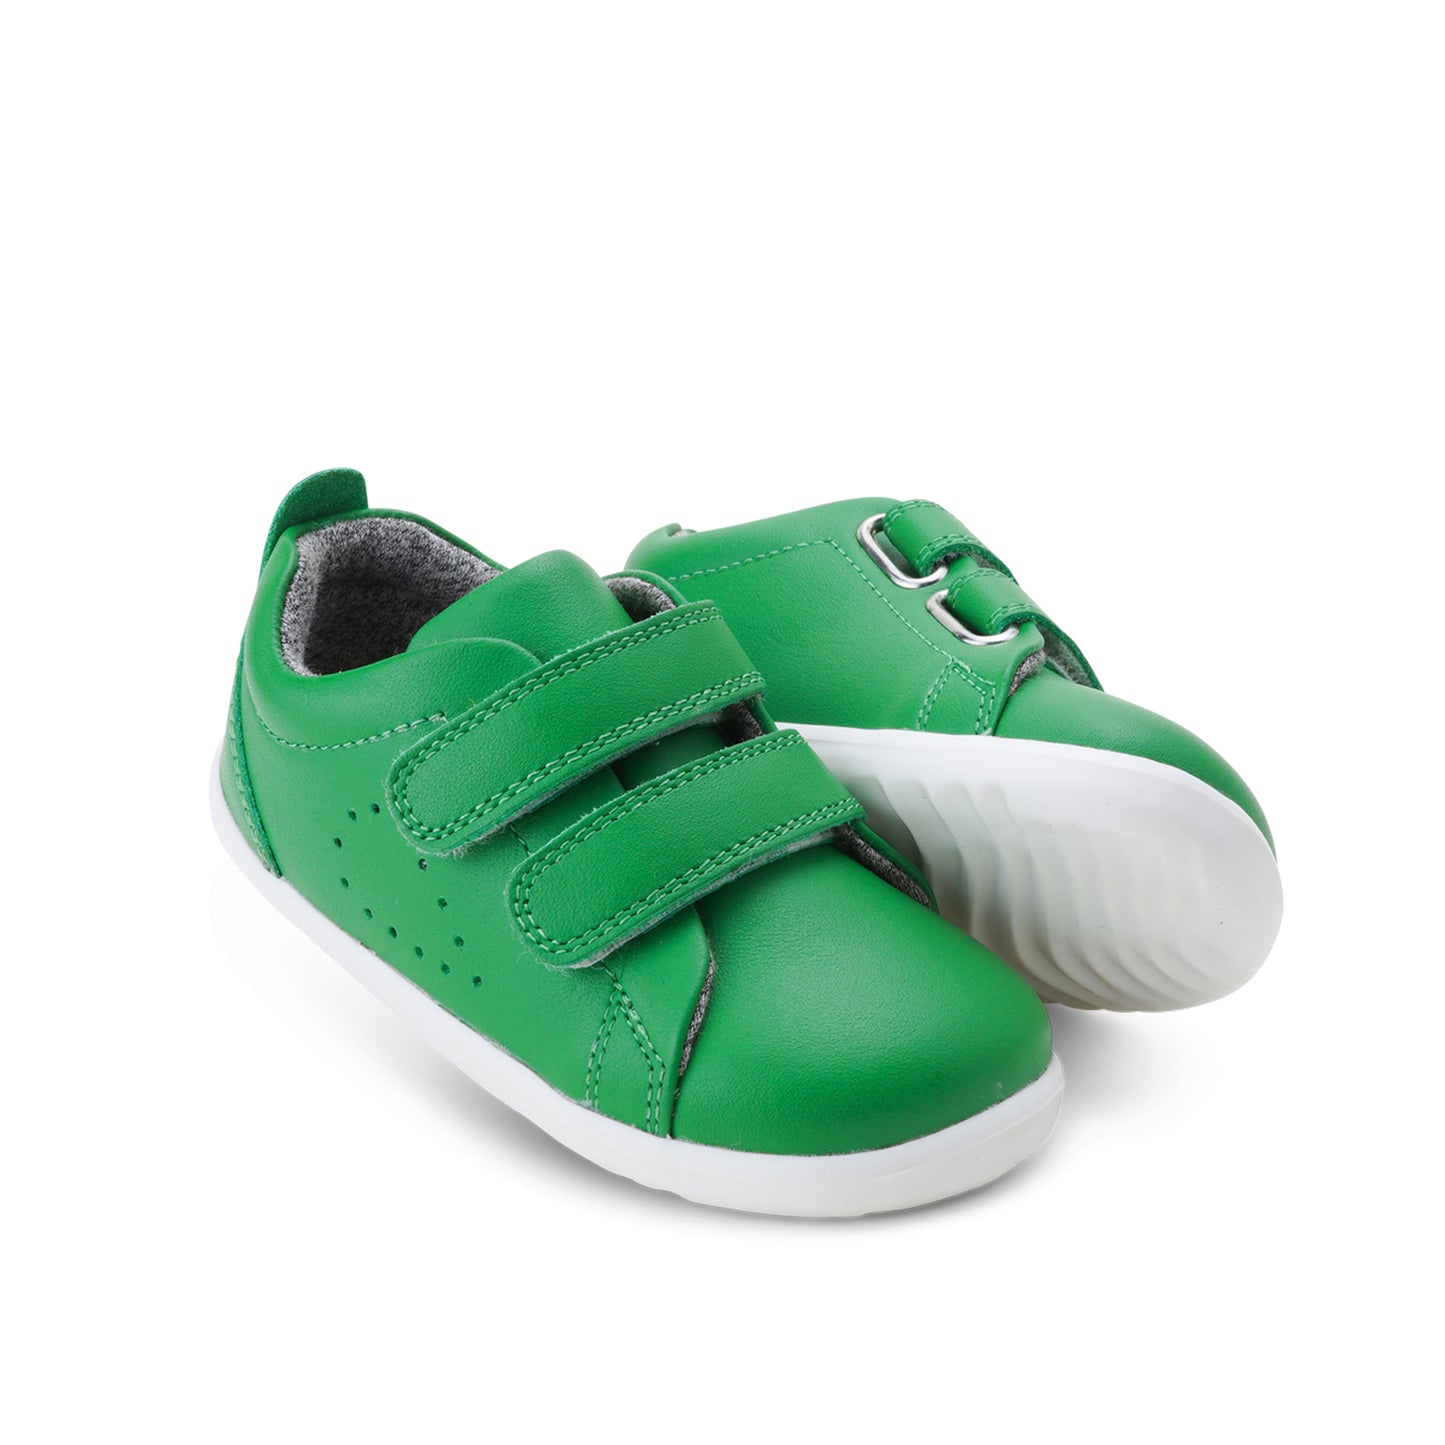 SU Grass Court Shoe in Emerald Green